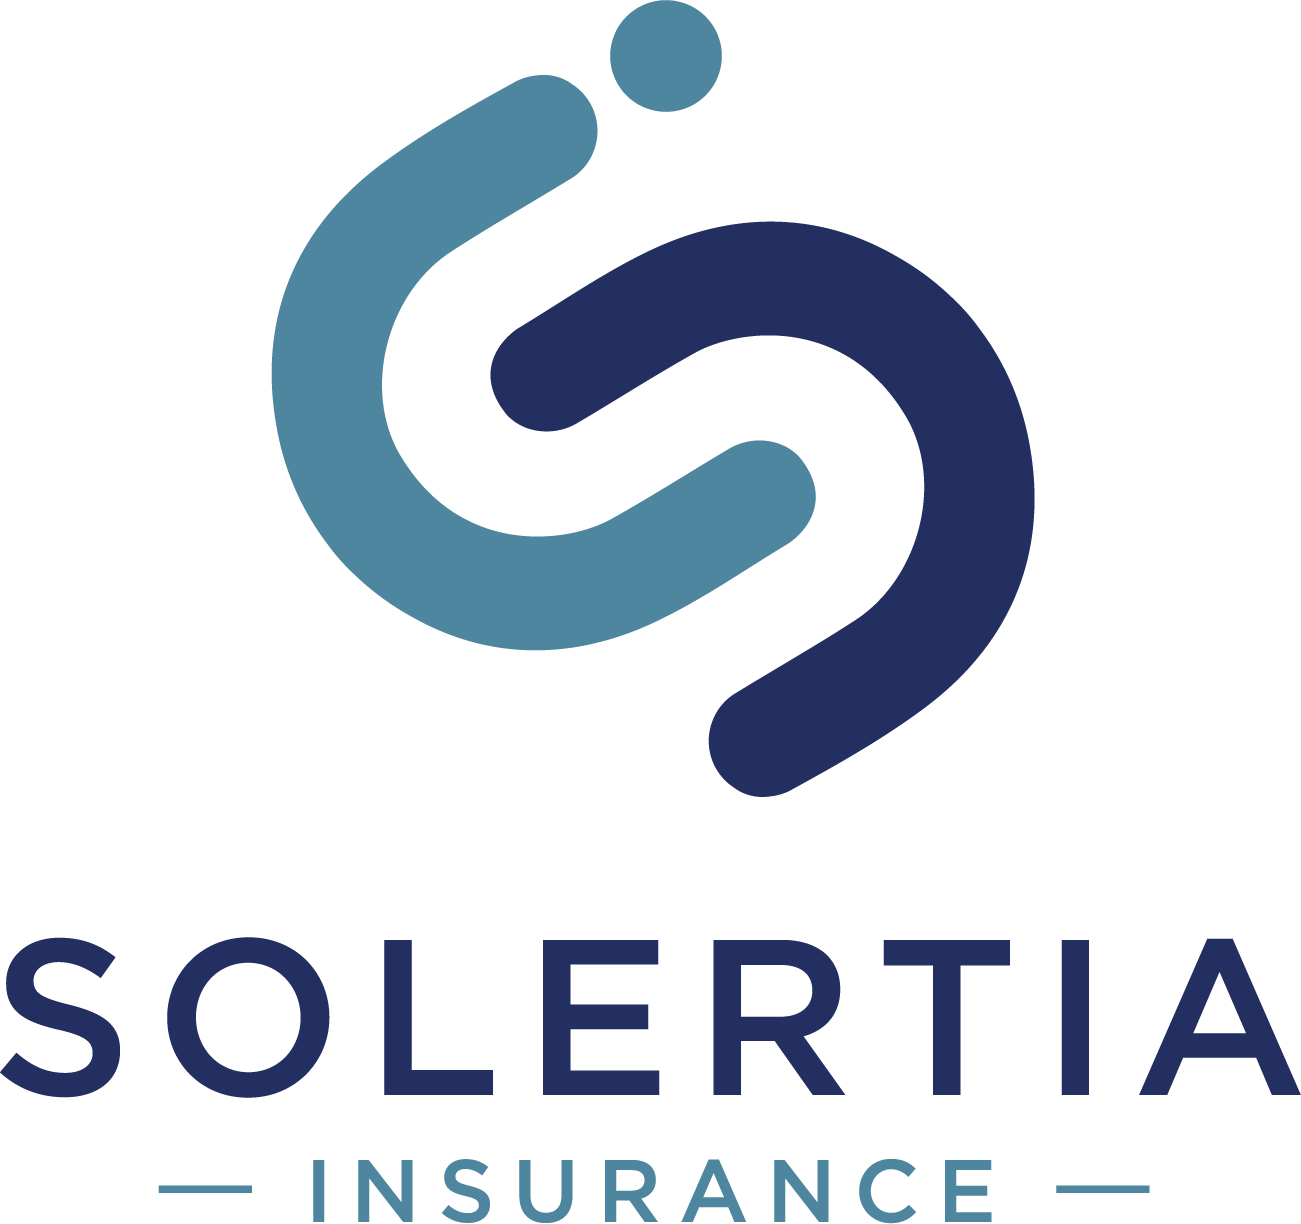 Solertia Insurance